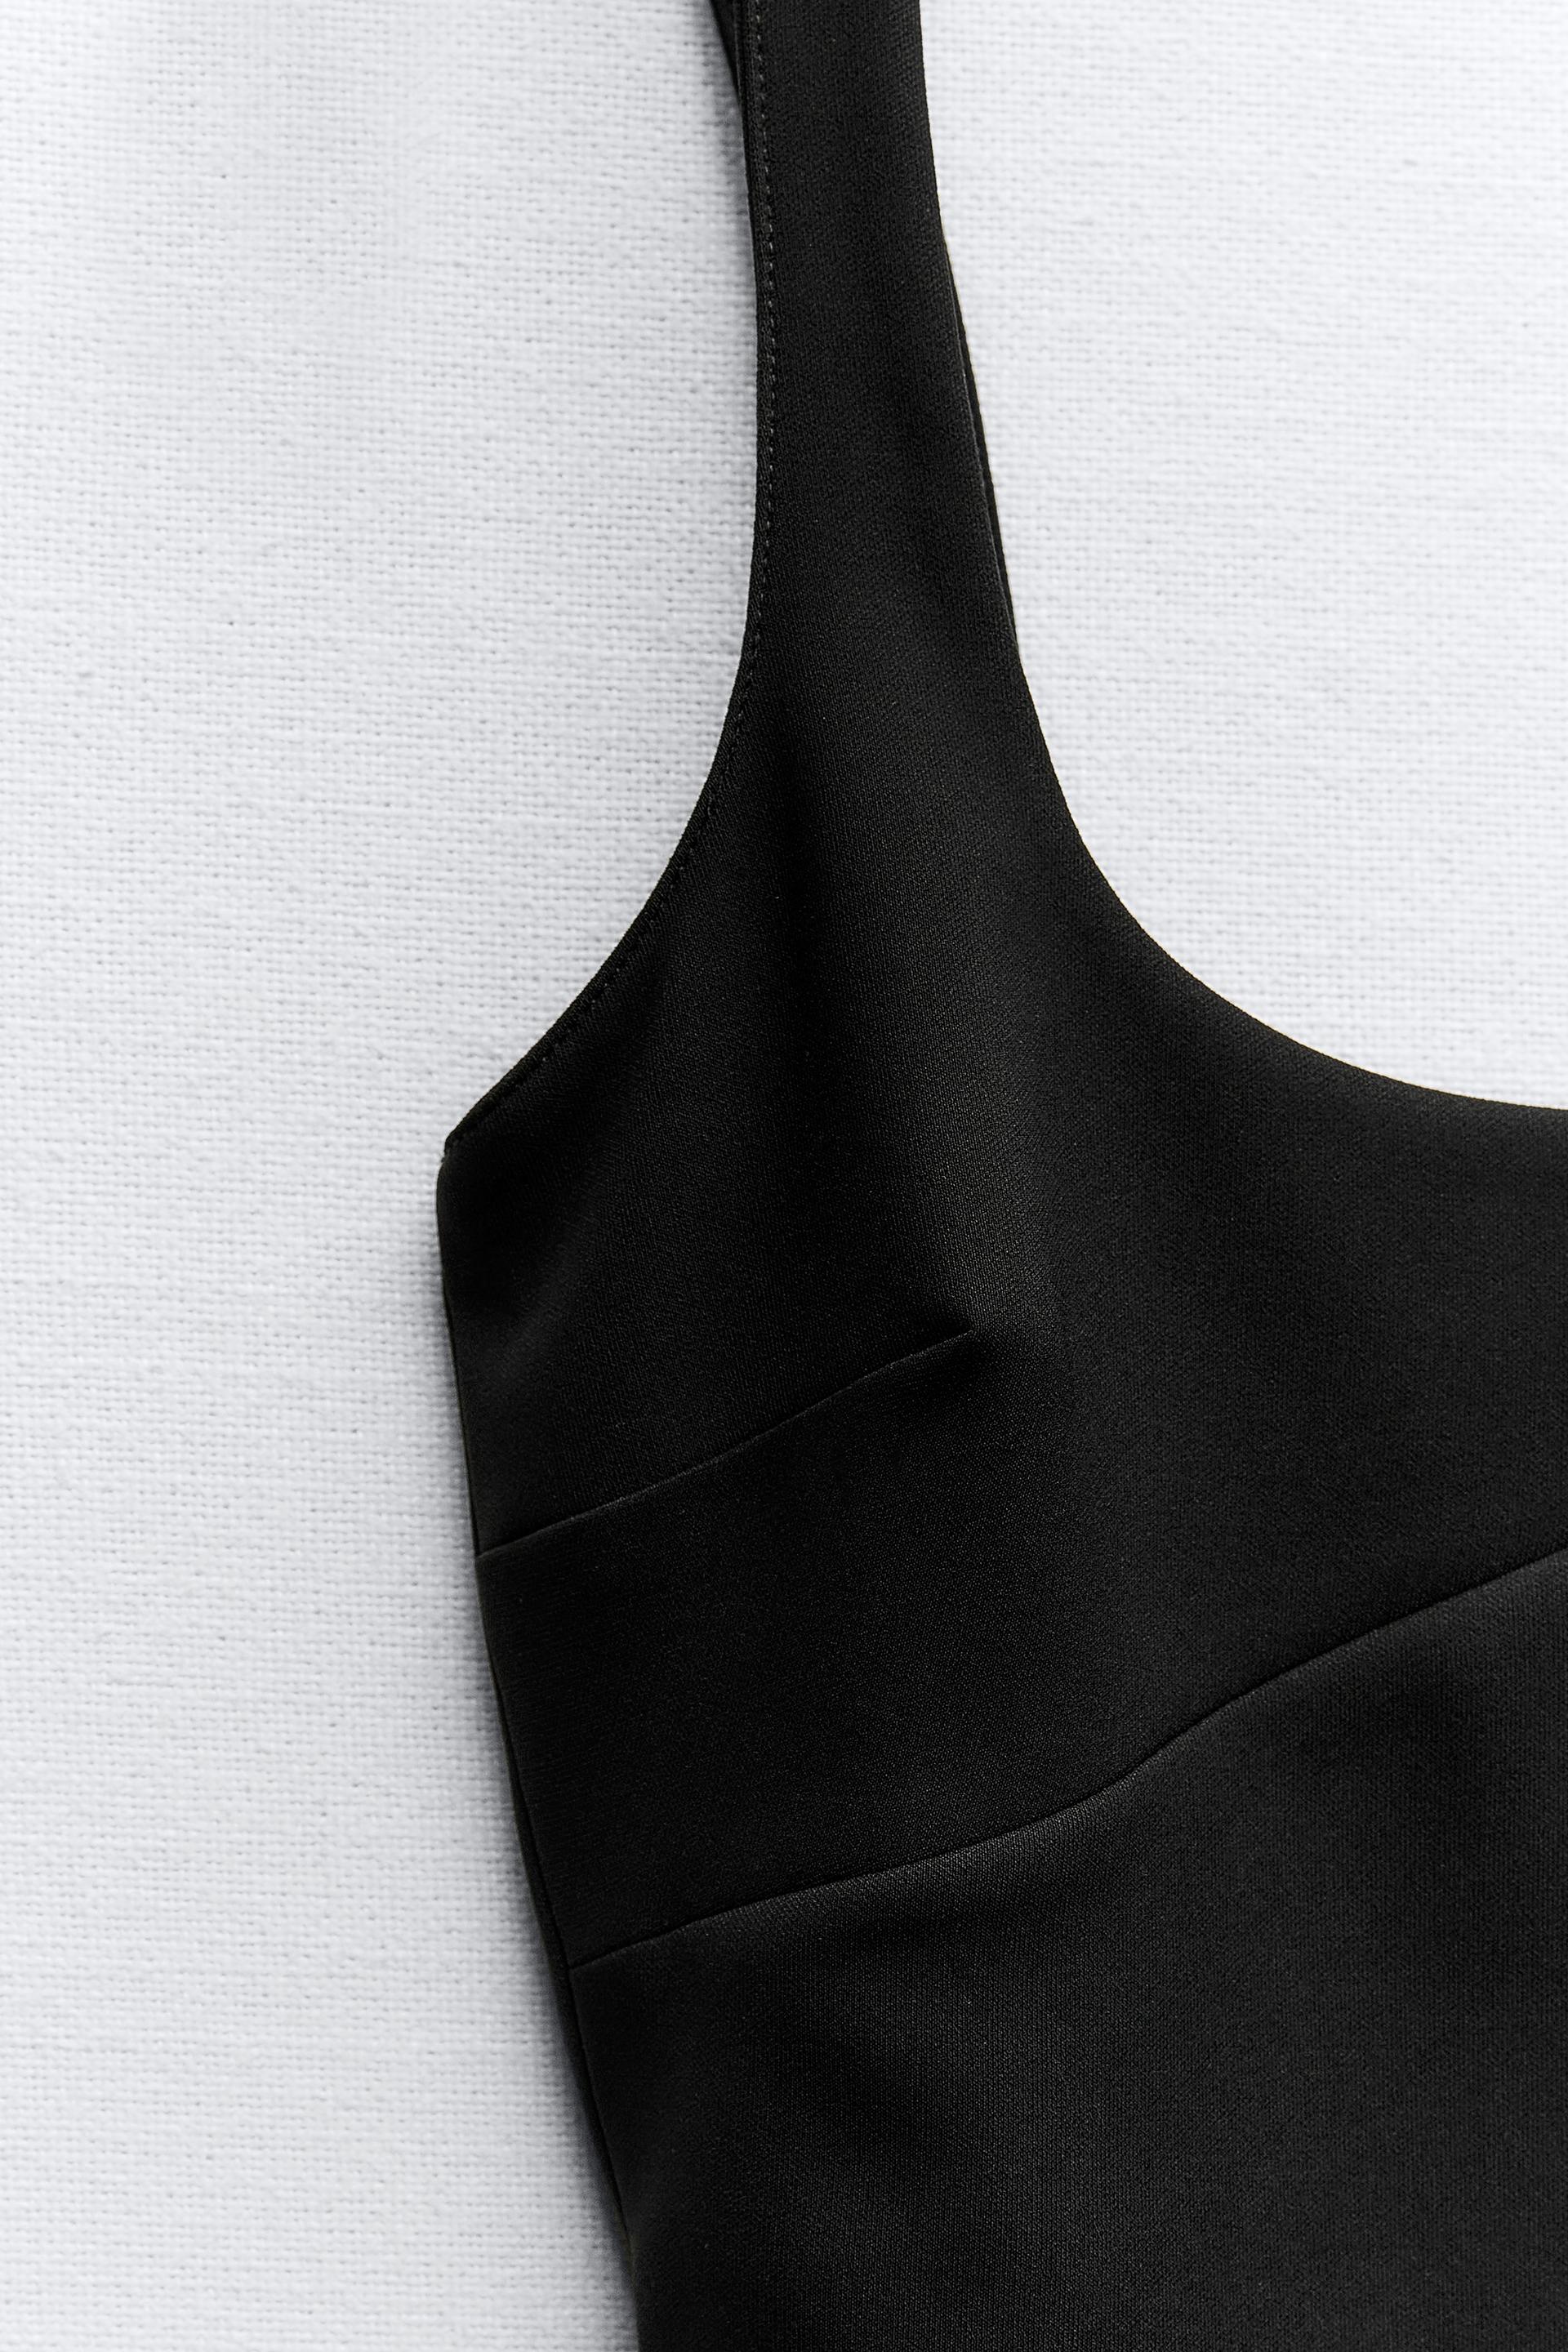 Zara Women's Bodysuit Sleeveless w/ Metal Detail Size S Mustard